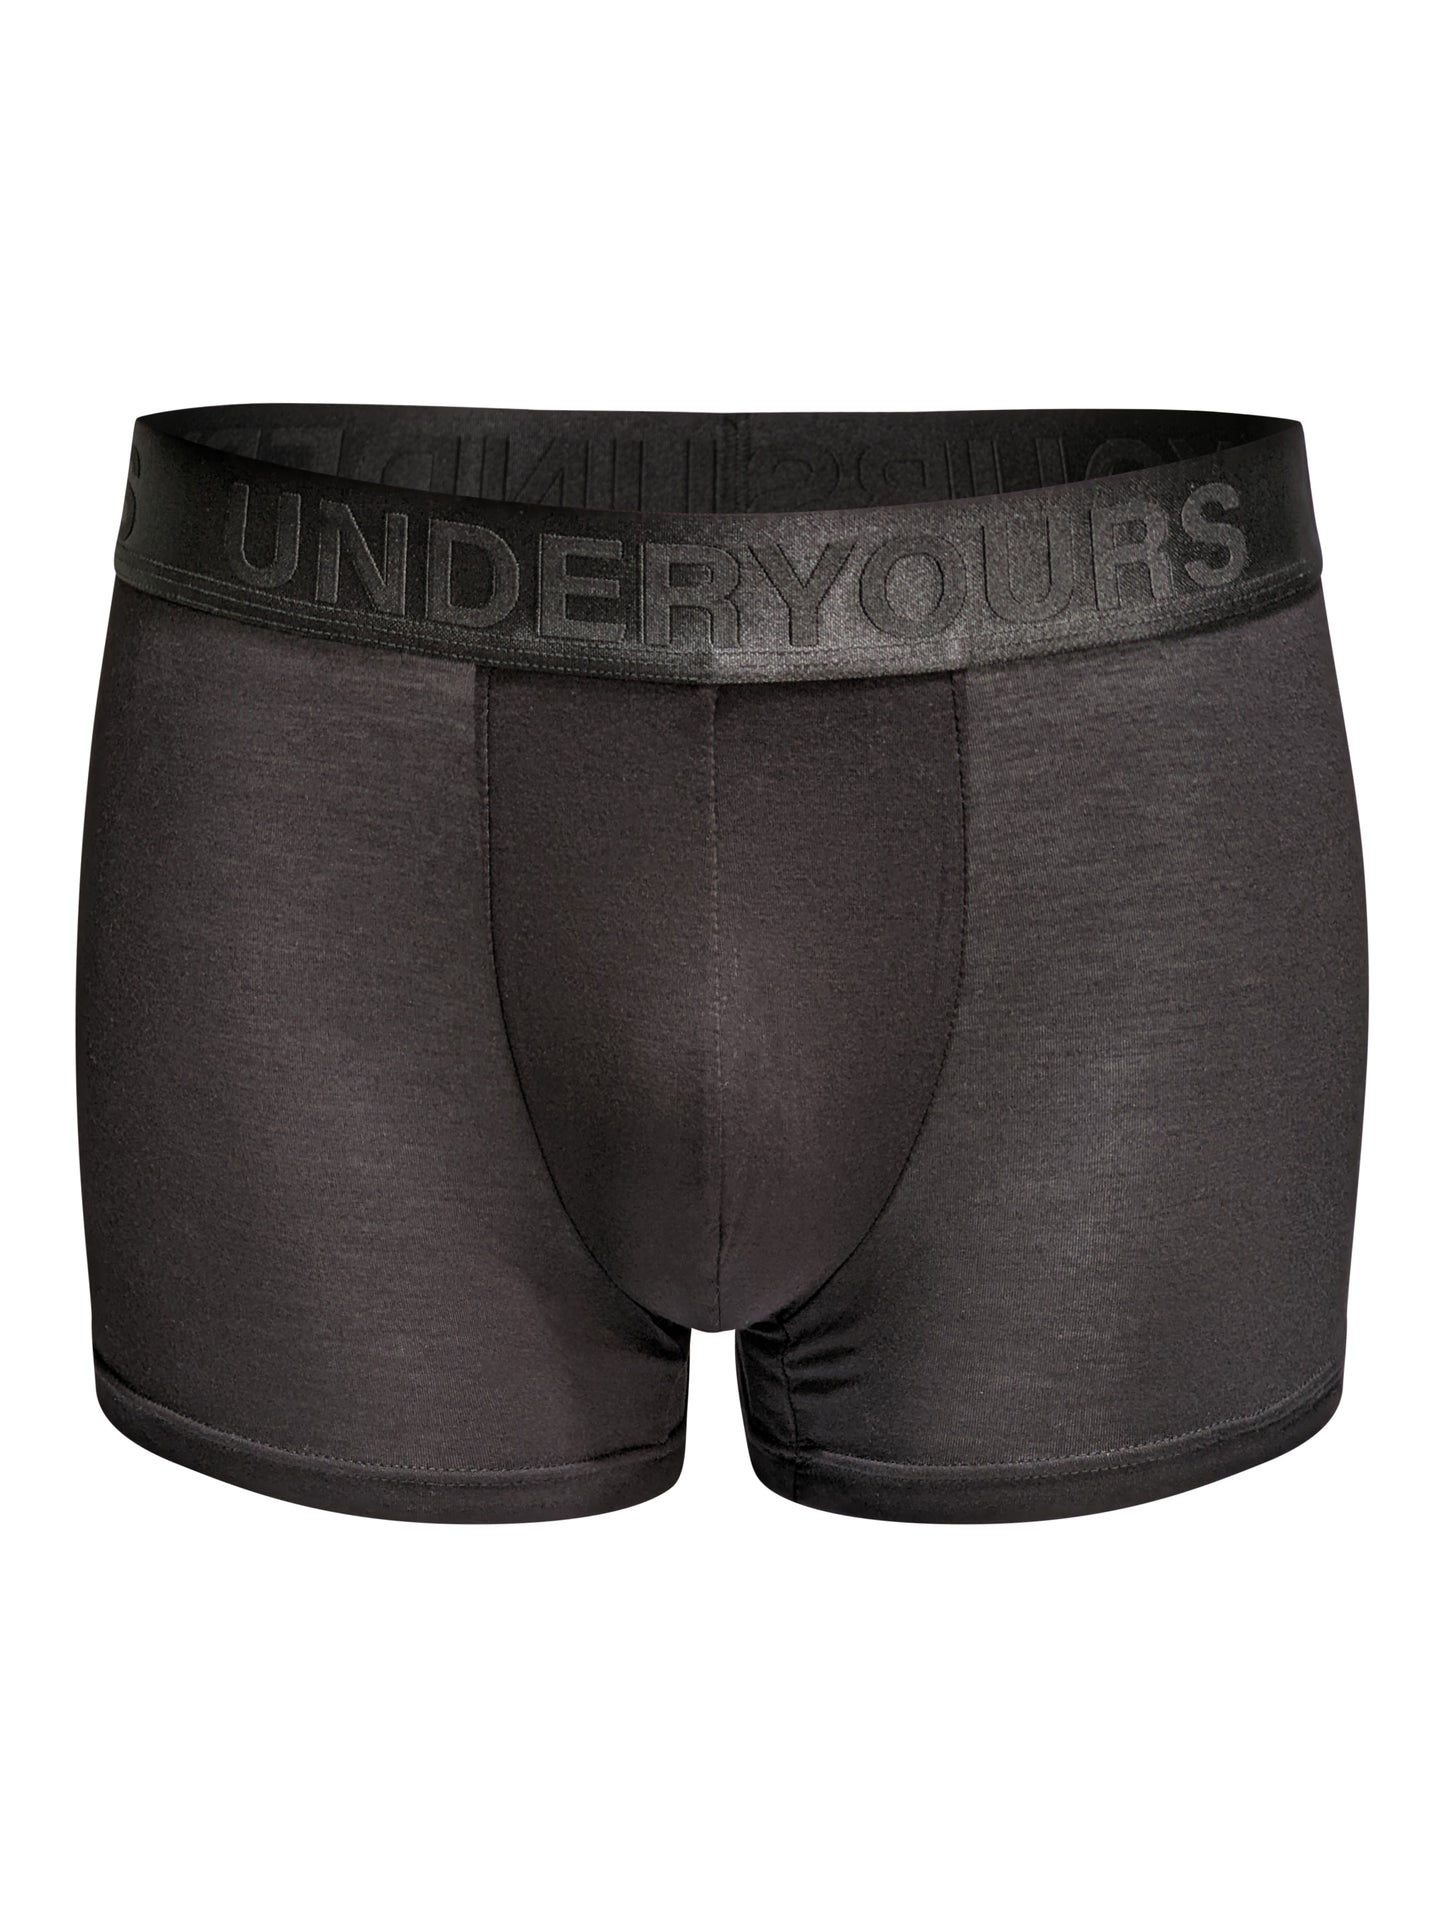 UnderYours Comfort Bamboo Boxer Short